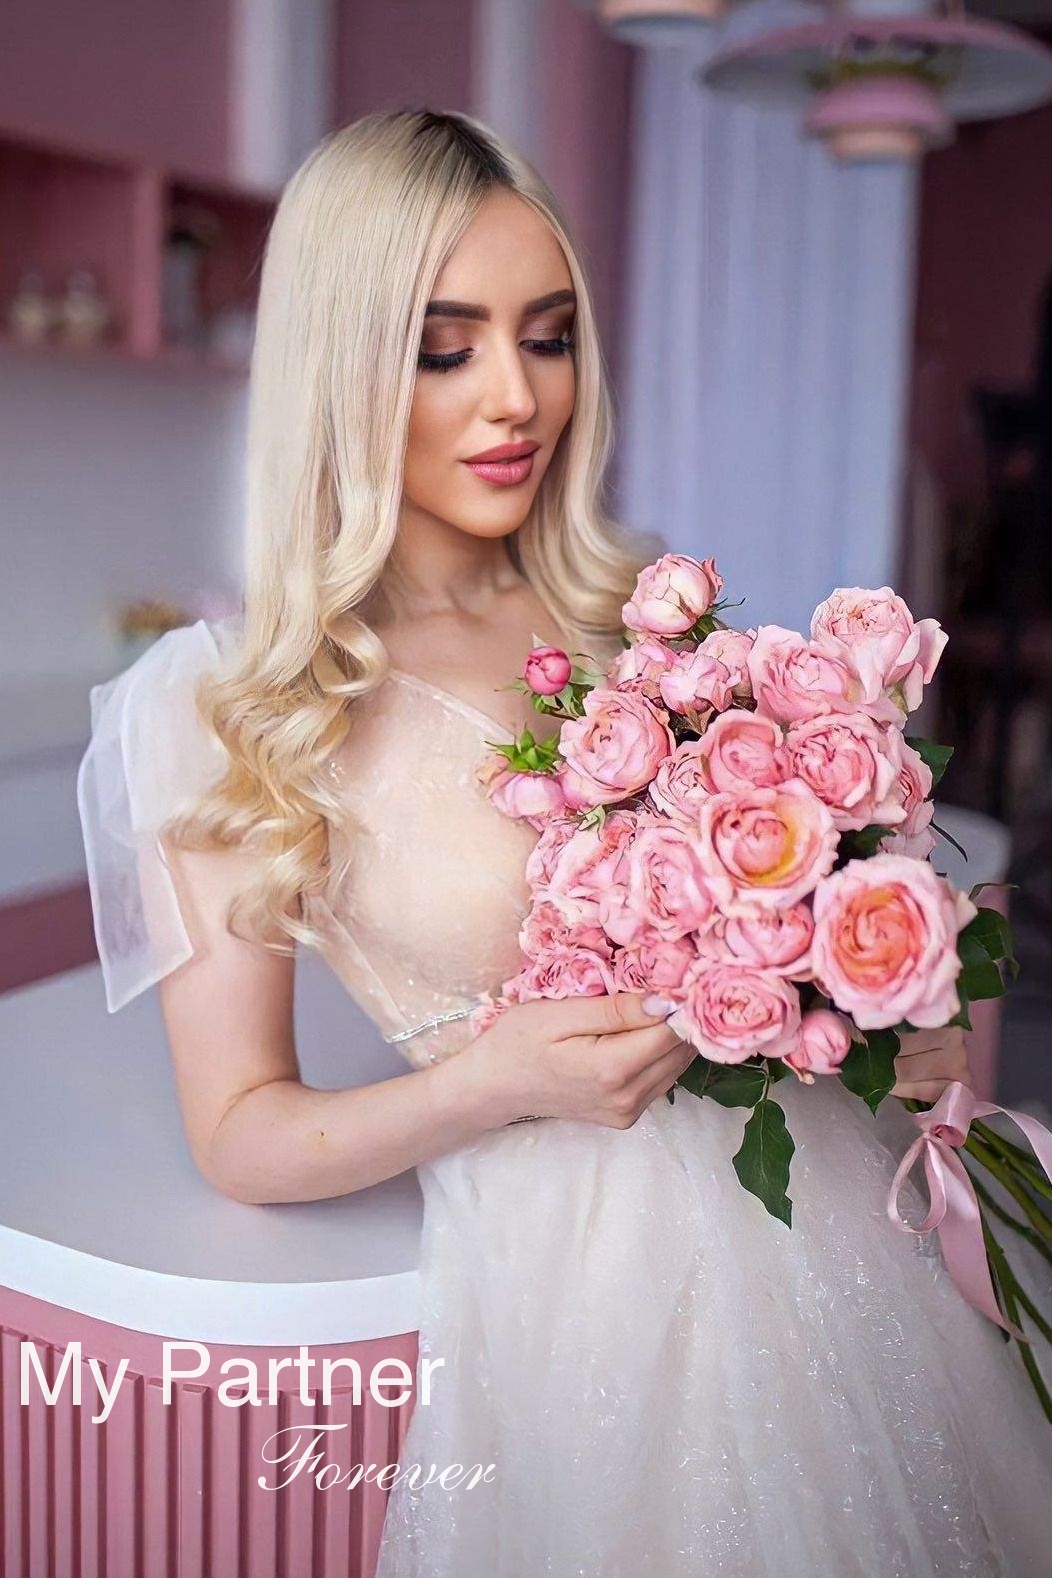 Charming Bride from Belarus - Yuliya from Minsk, Belarus